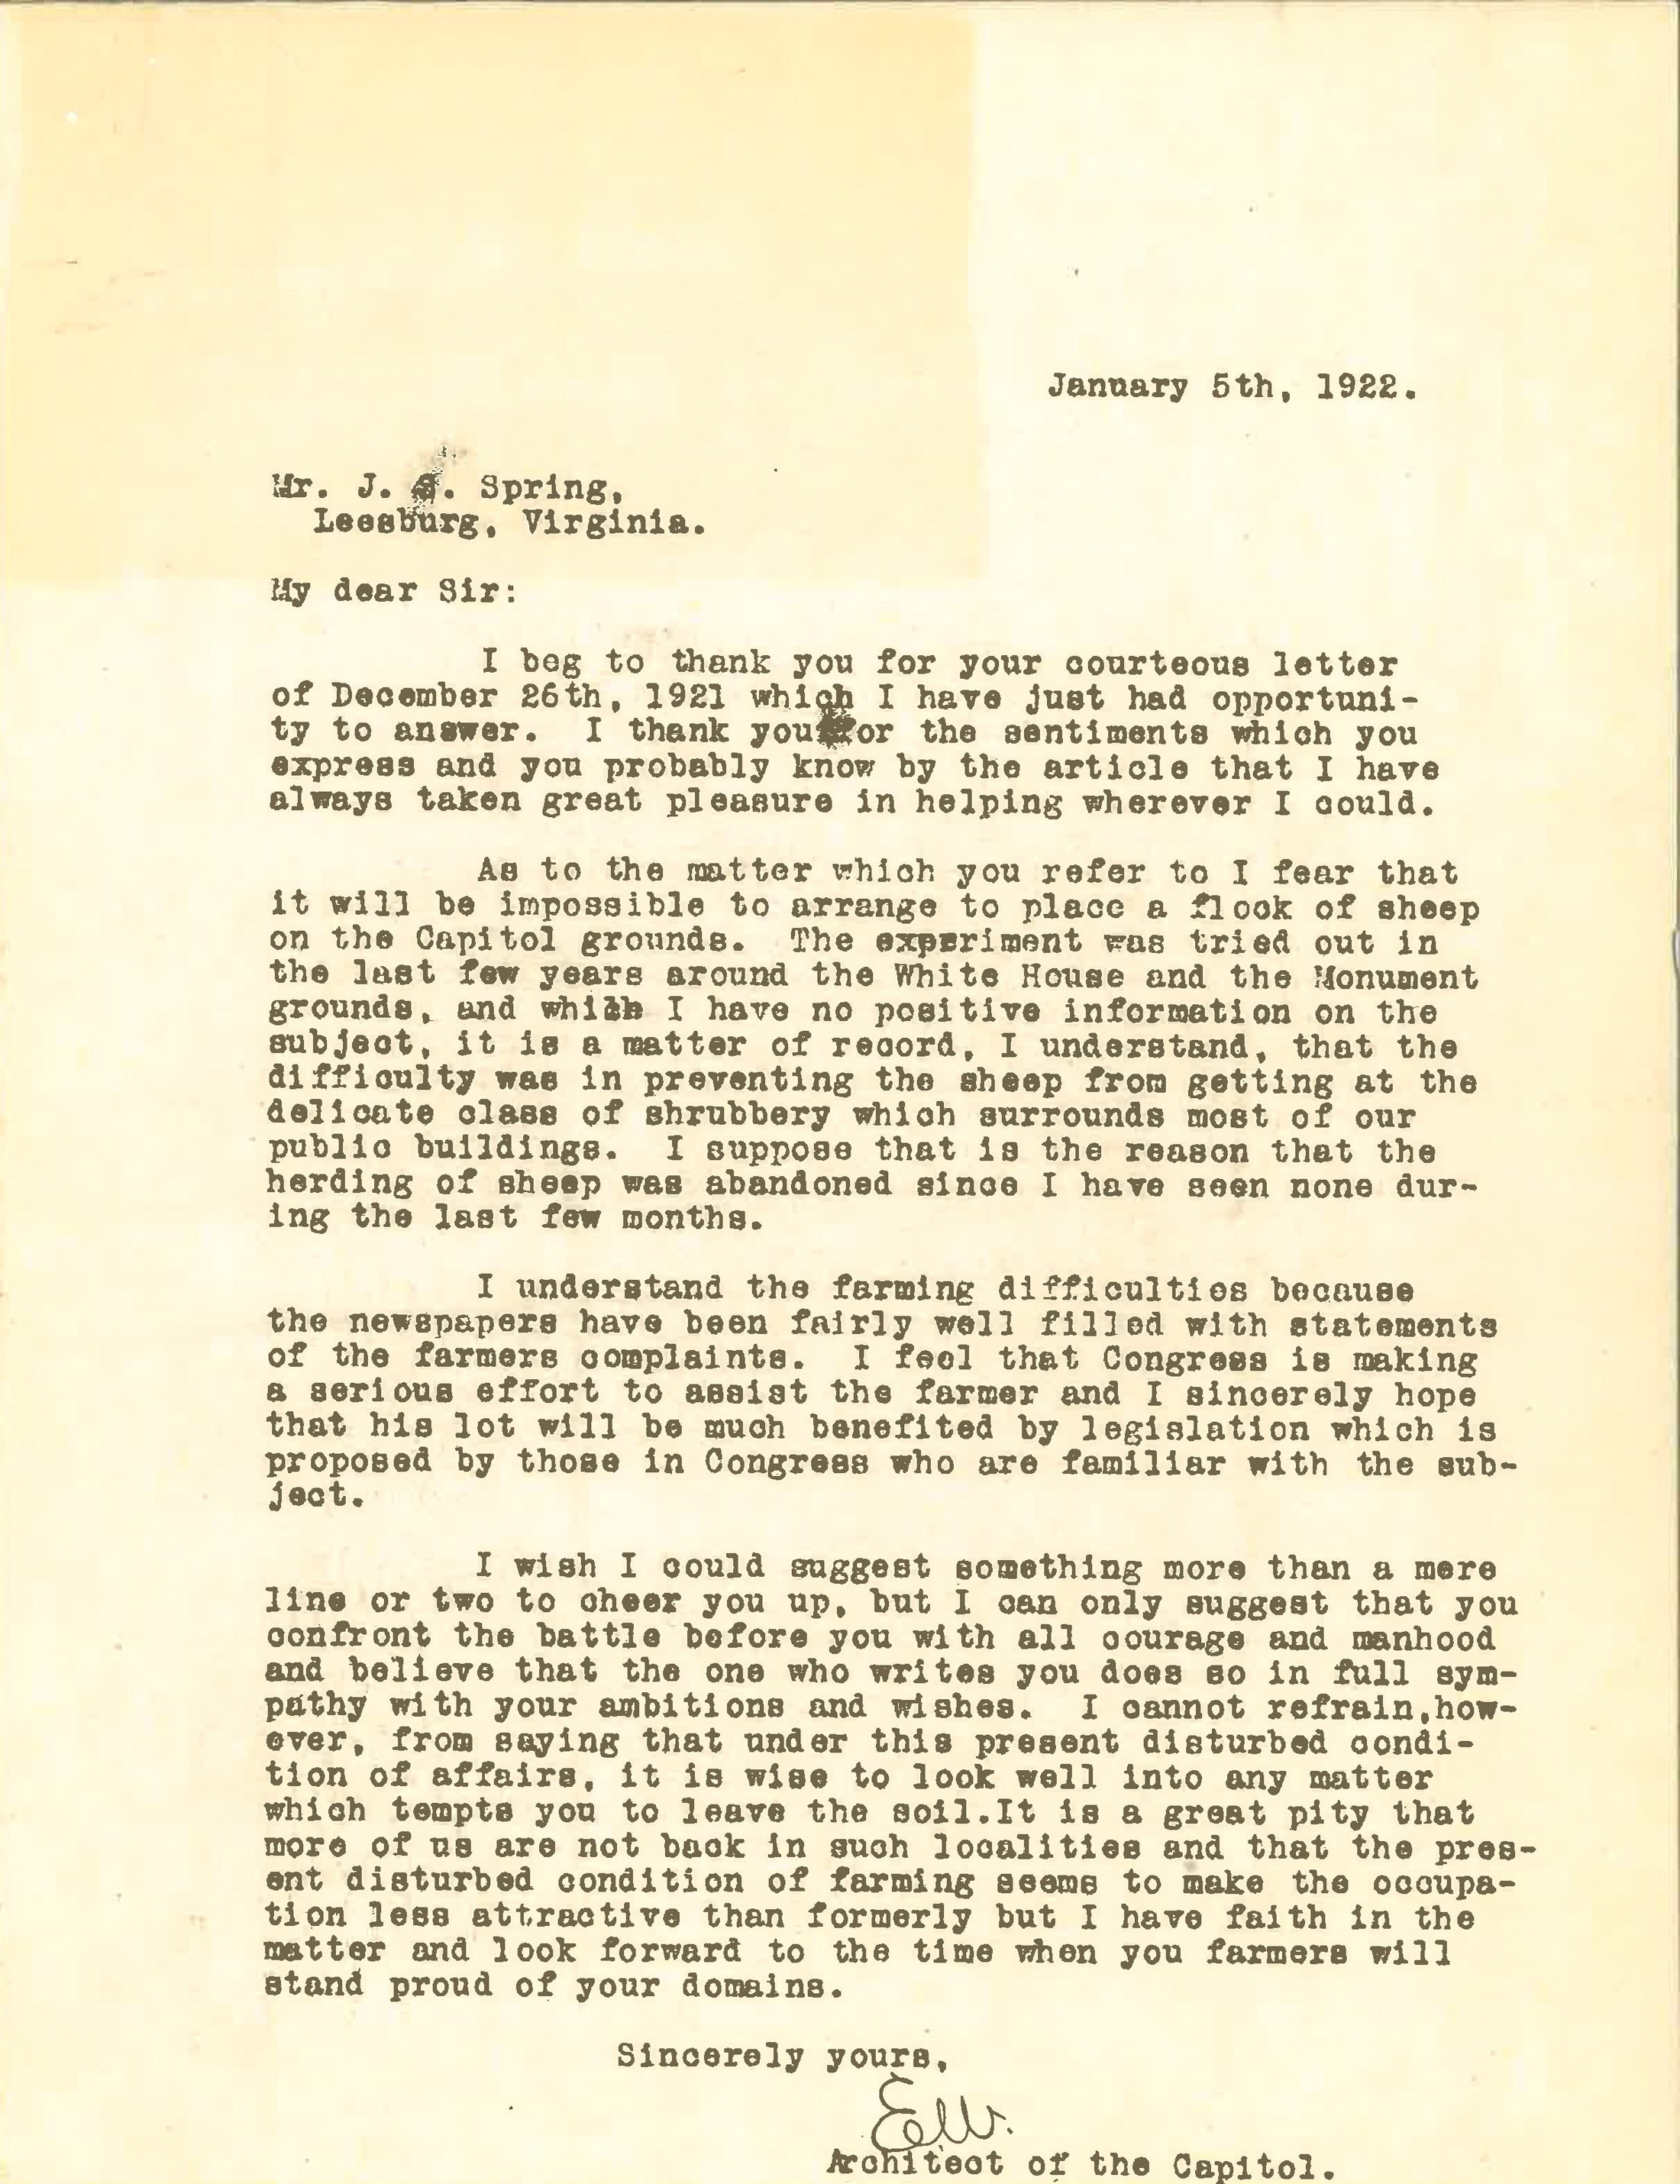 Elliot Woods response to J.S. Spring - January 5, 1922